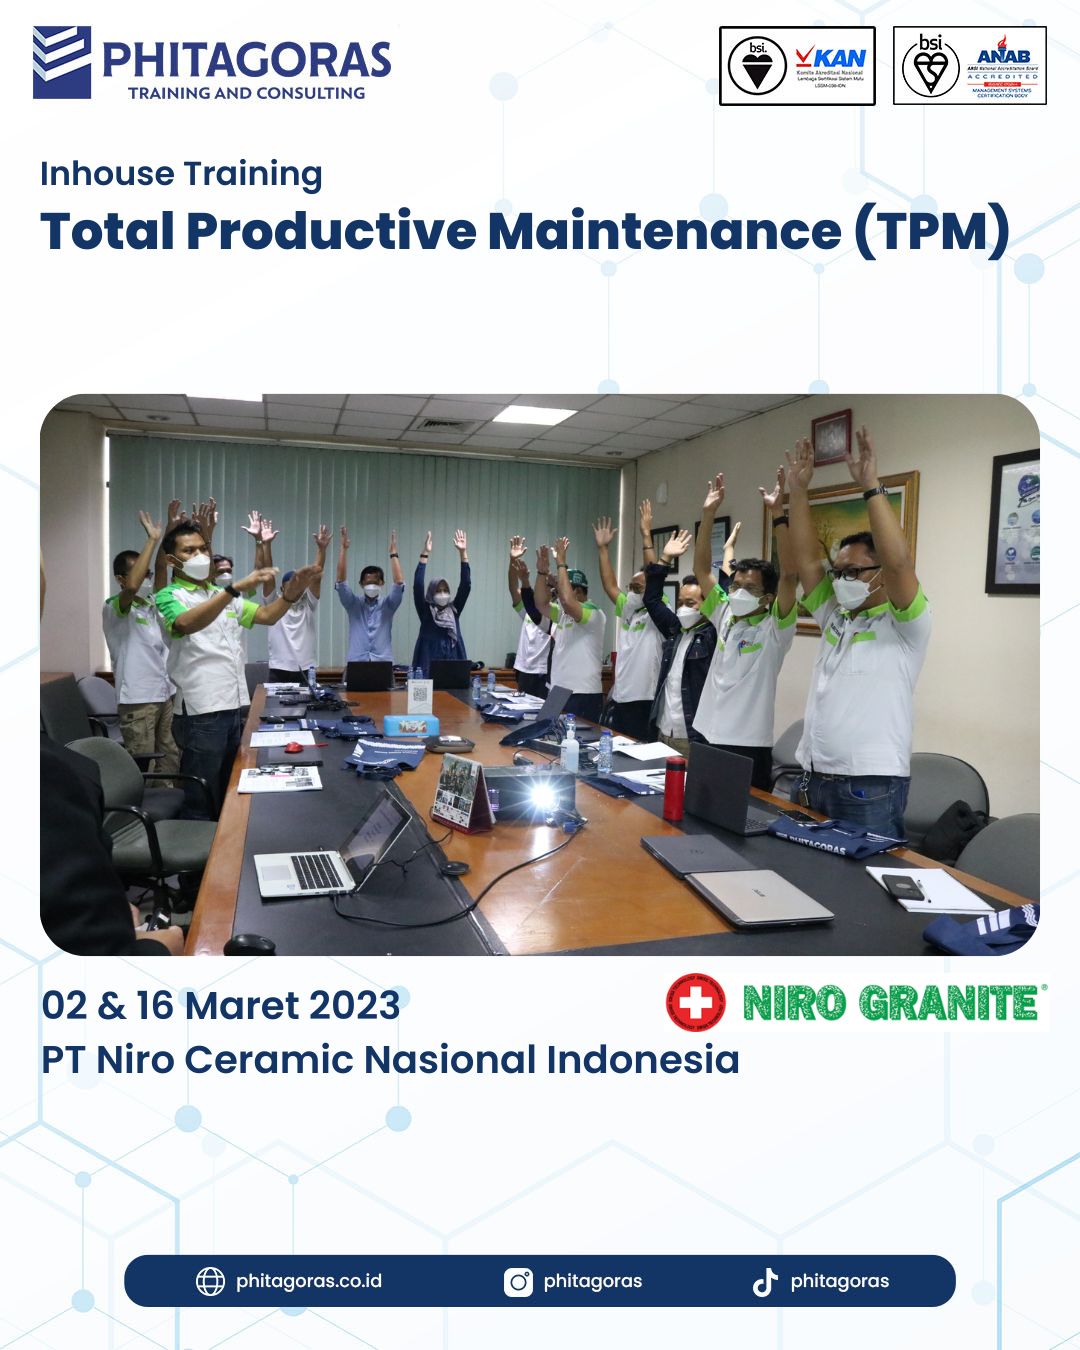 Inhouse Training Total Productive Maintenance (TPM) - PT Niro Ceramic Nasional Indonesia